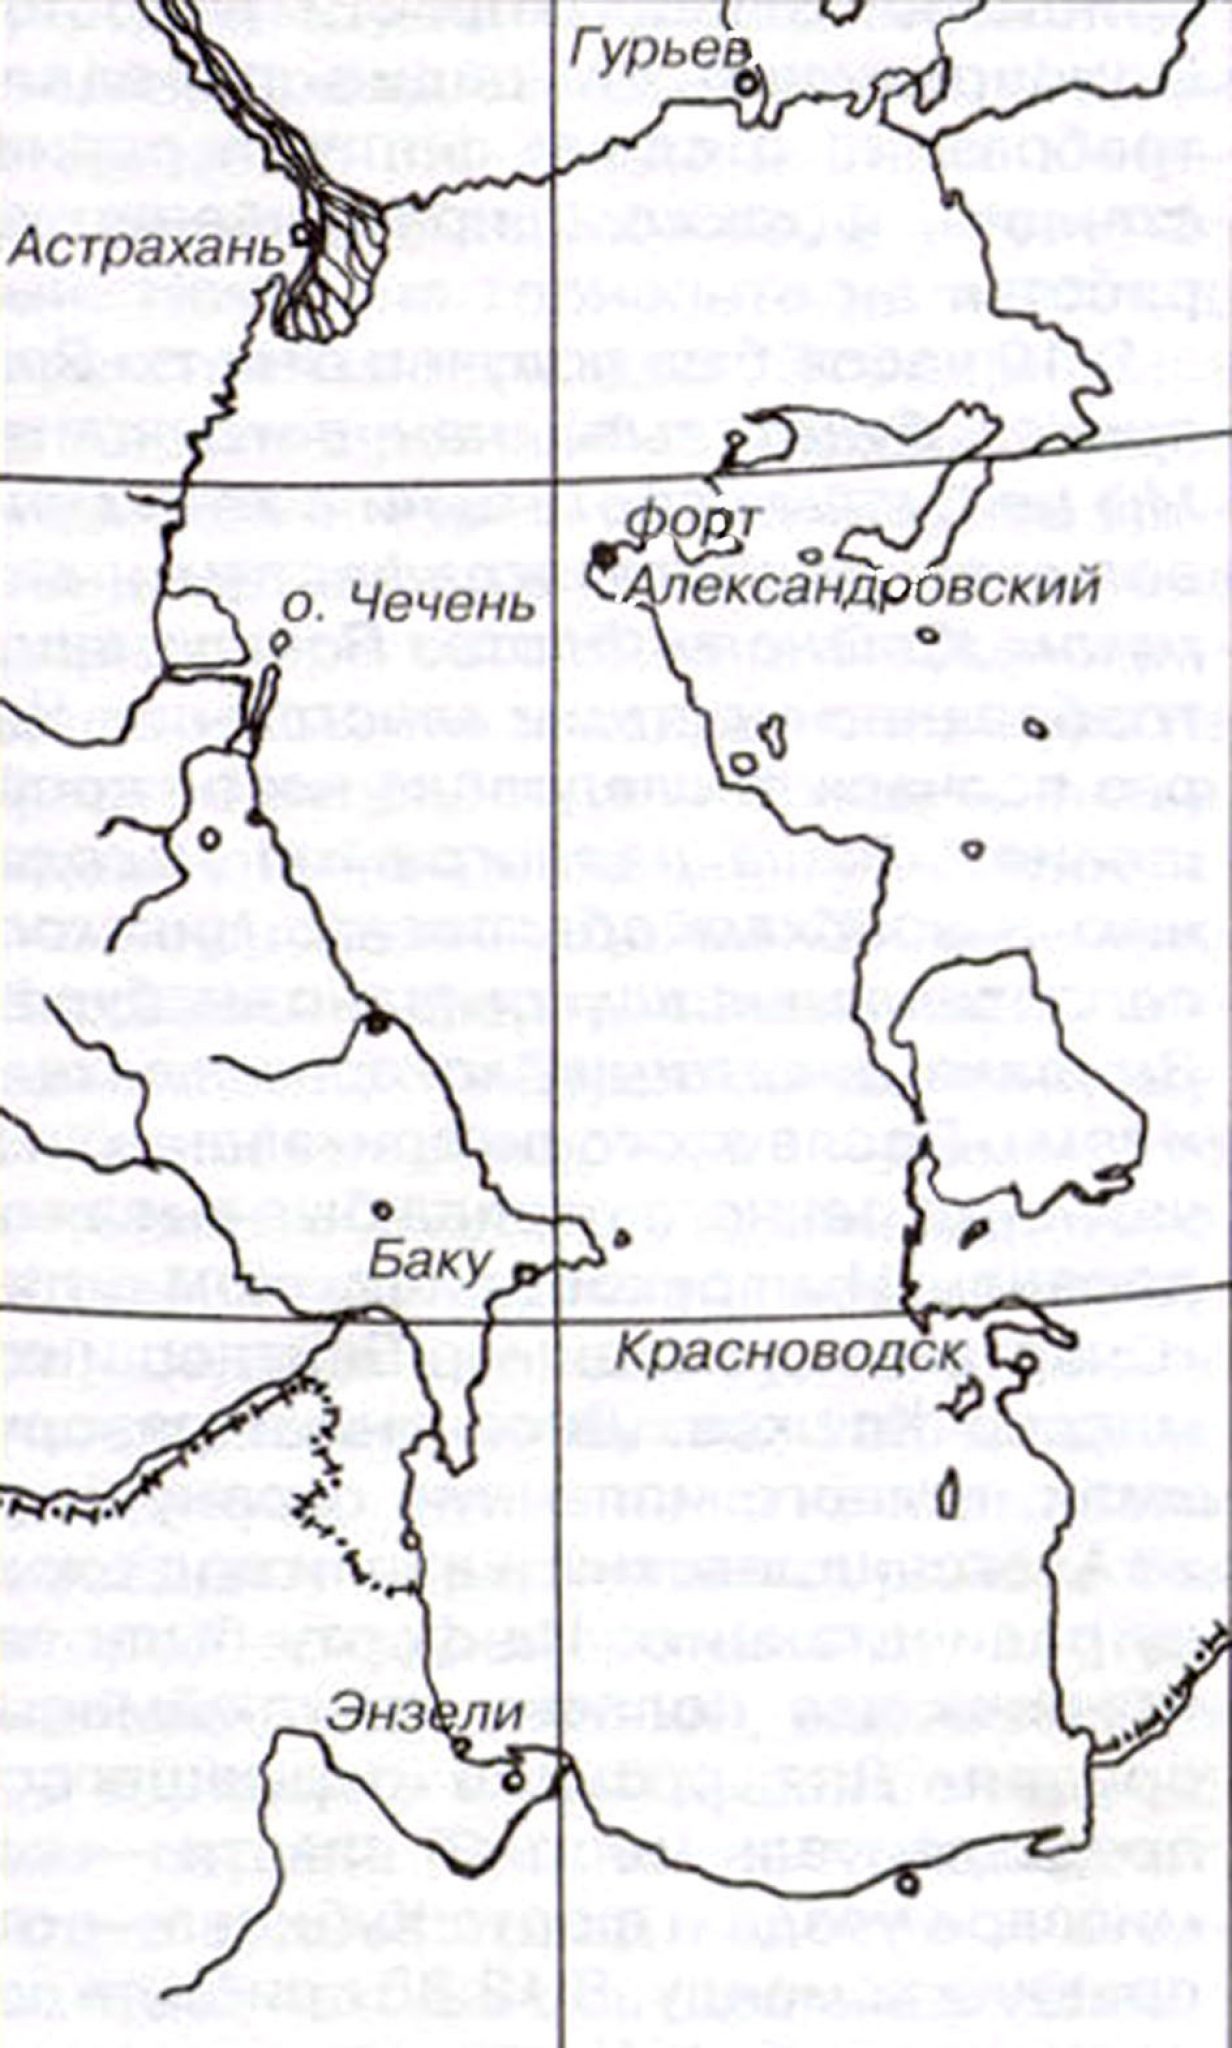 Острова в каспийском море на карте. Александровский Форт на Каспии. Каспийское море 1918 год.